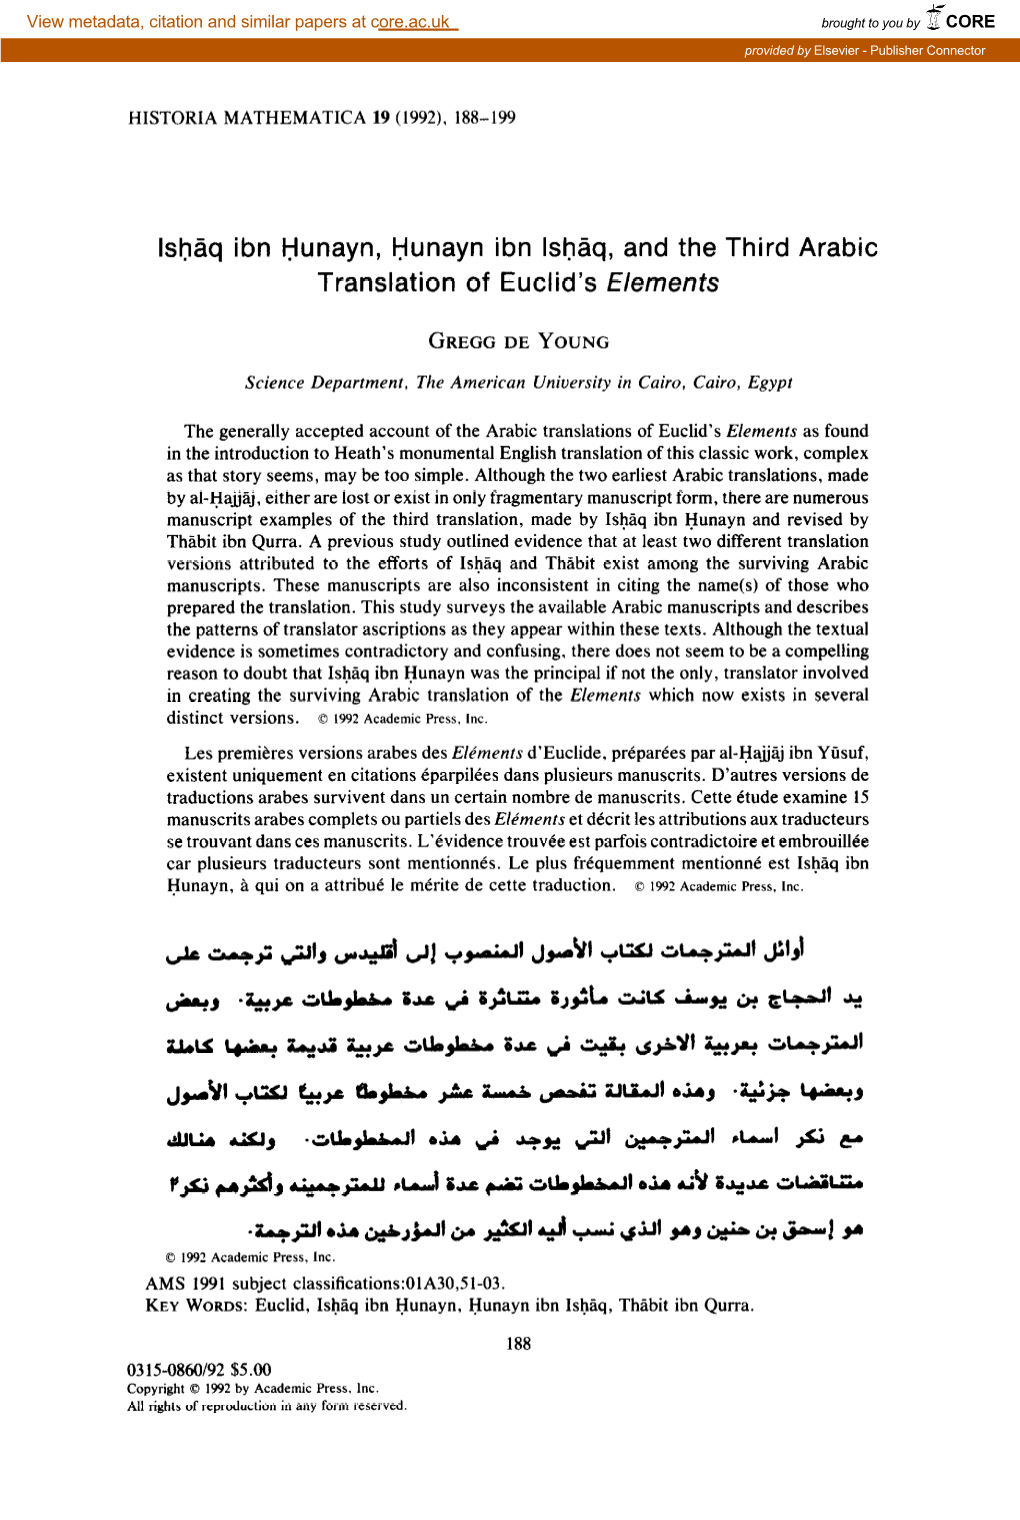 Lshaq Ibn Hunayn, Hunayn Ibn Ishaq, and the Third Arabic Translation of Euclid’S Elements